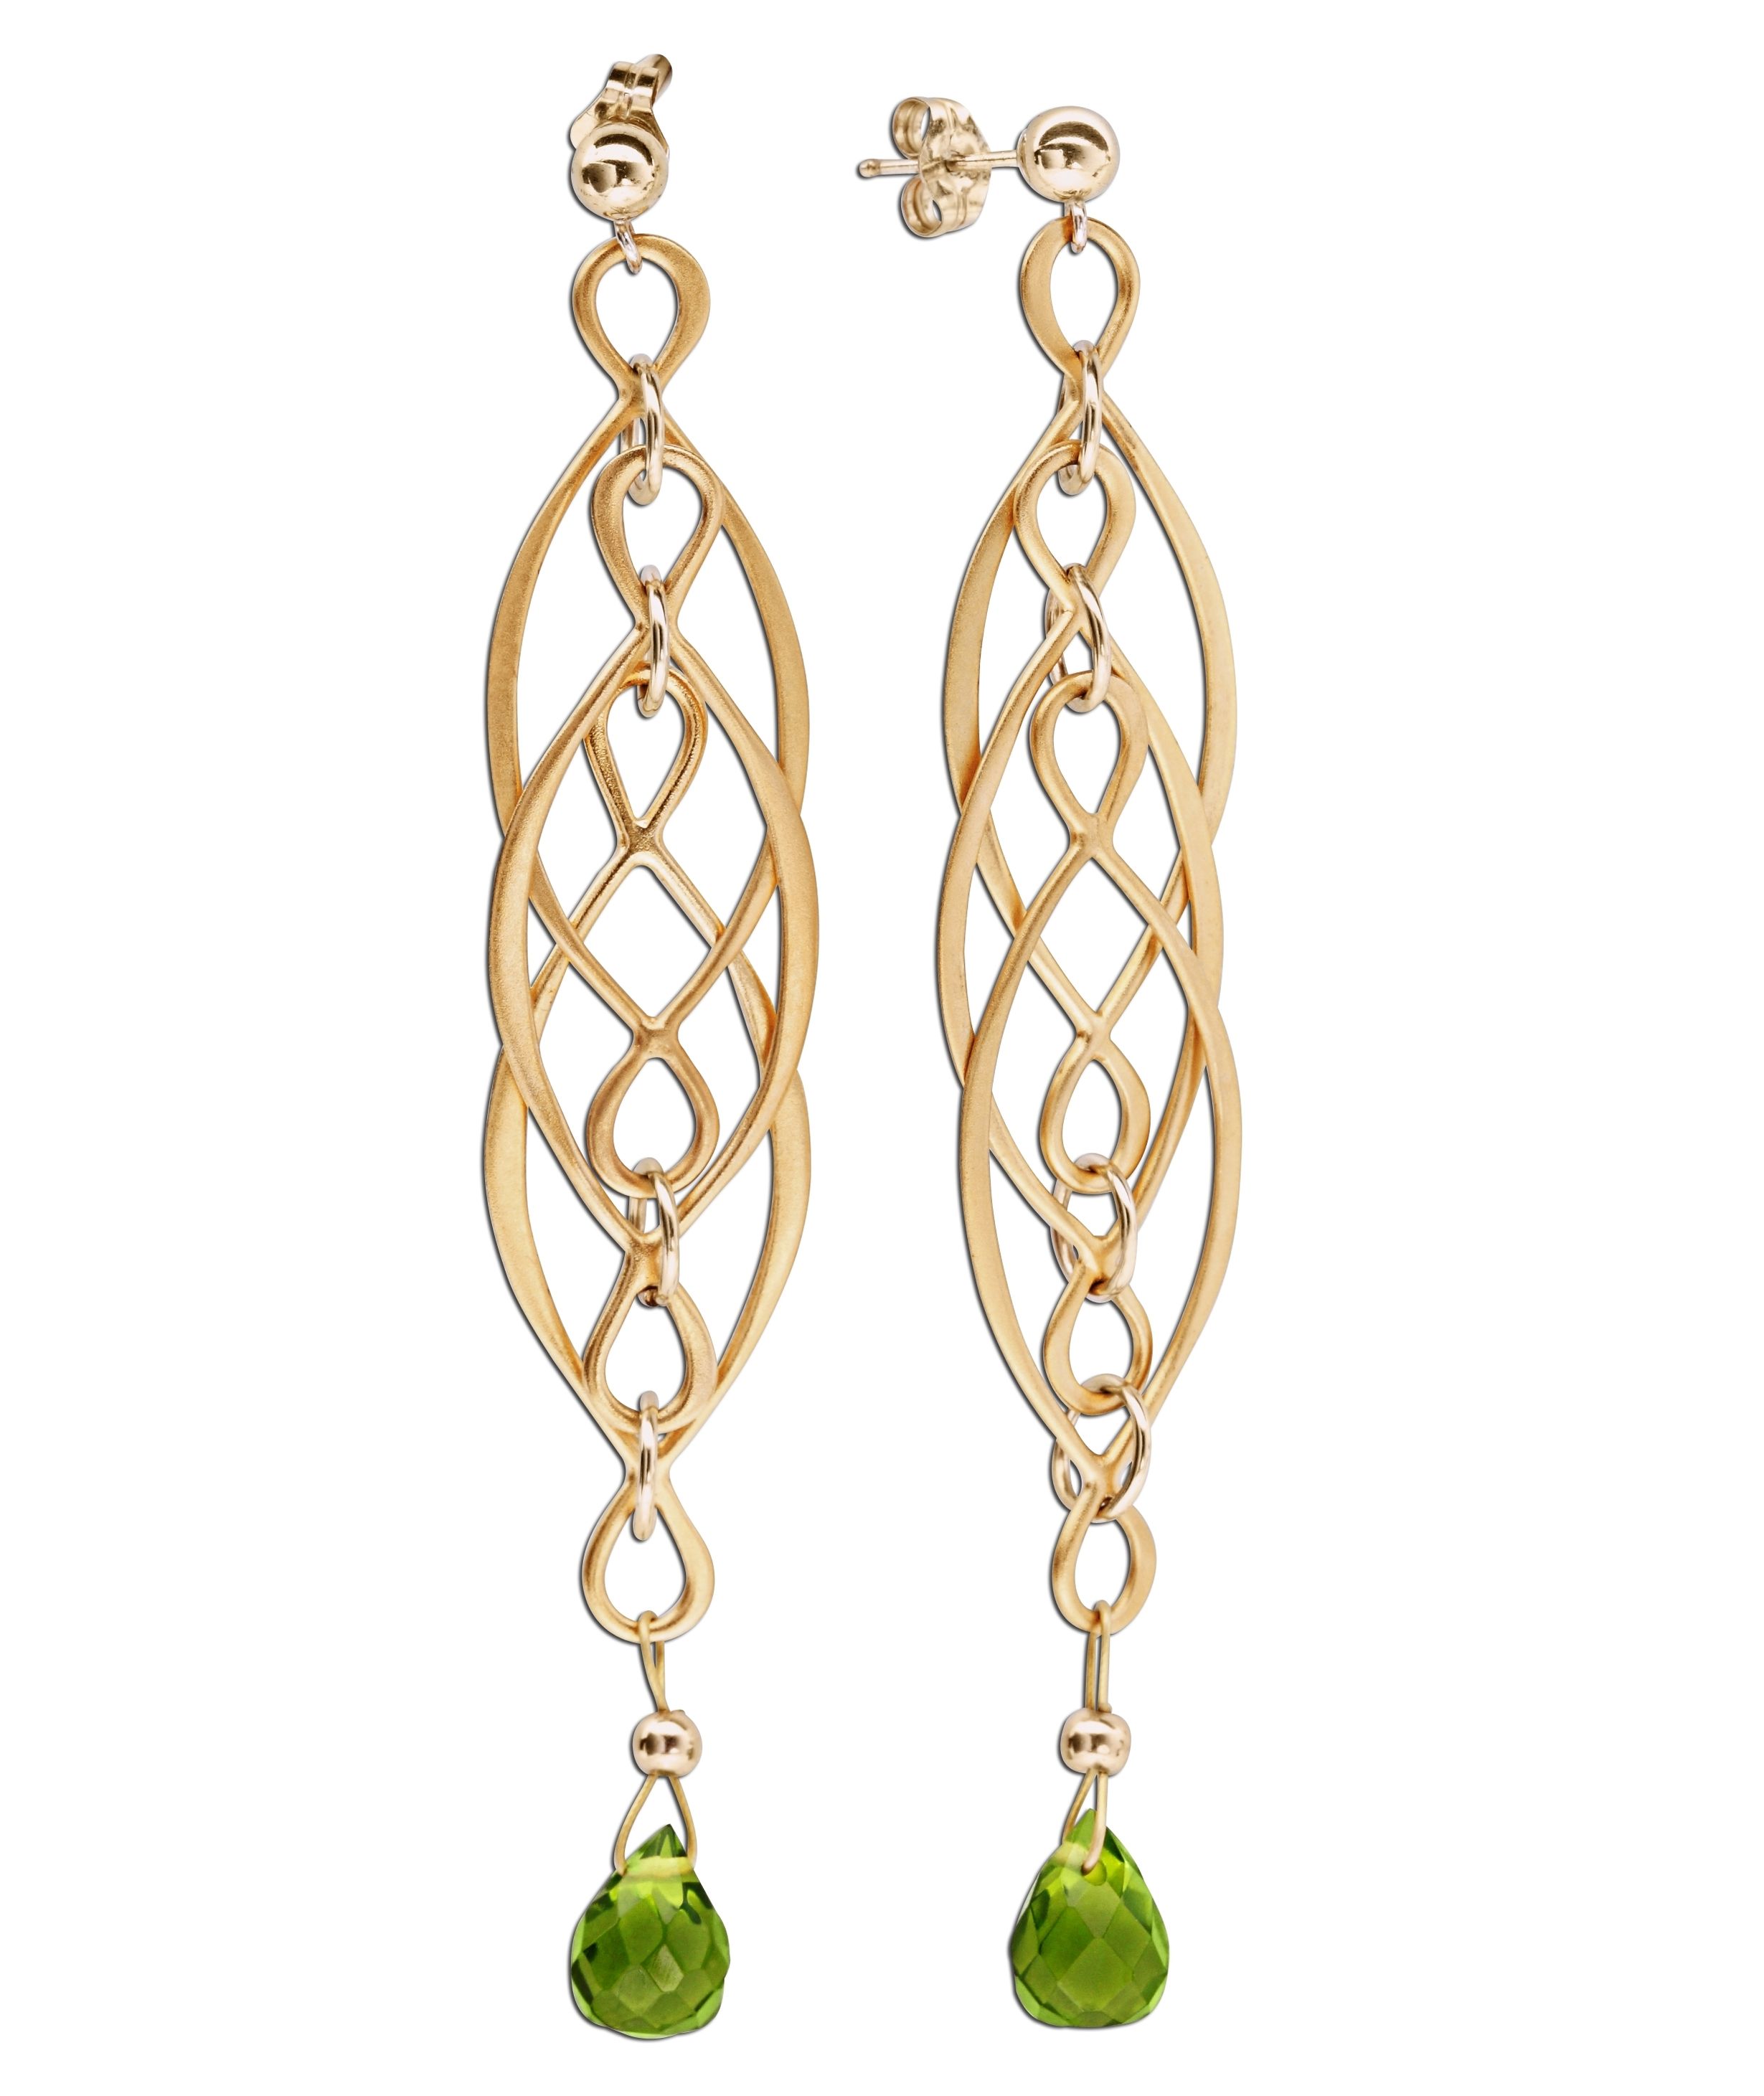 Gemshine Ohrringe Infinity, Gold 24k, Turmalin Farbe: grün | Weltbild.at